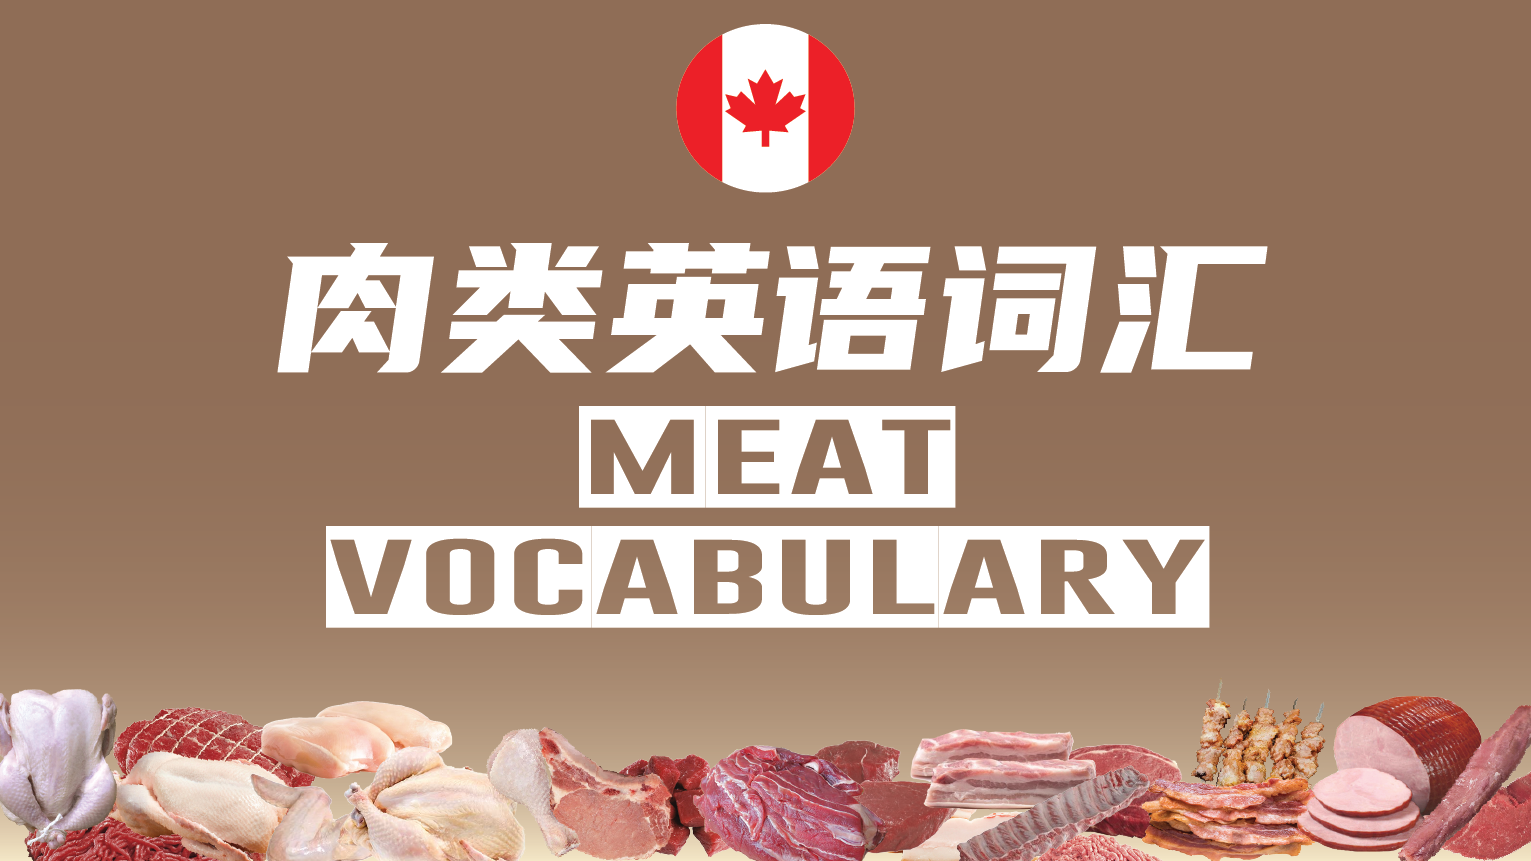 Meat Vocabulary